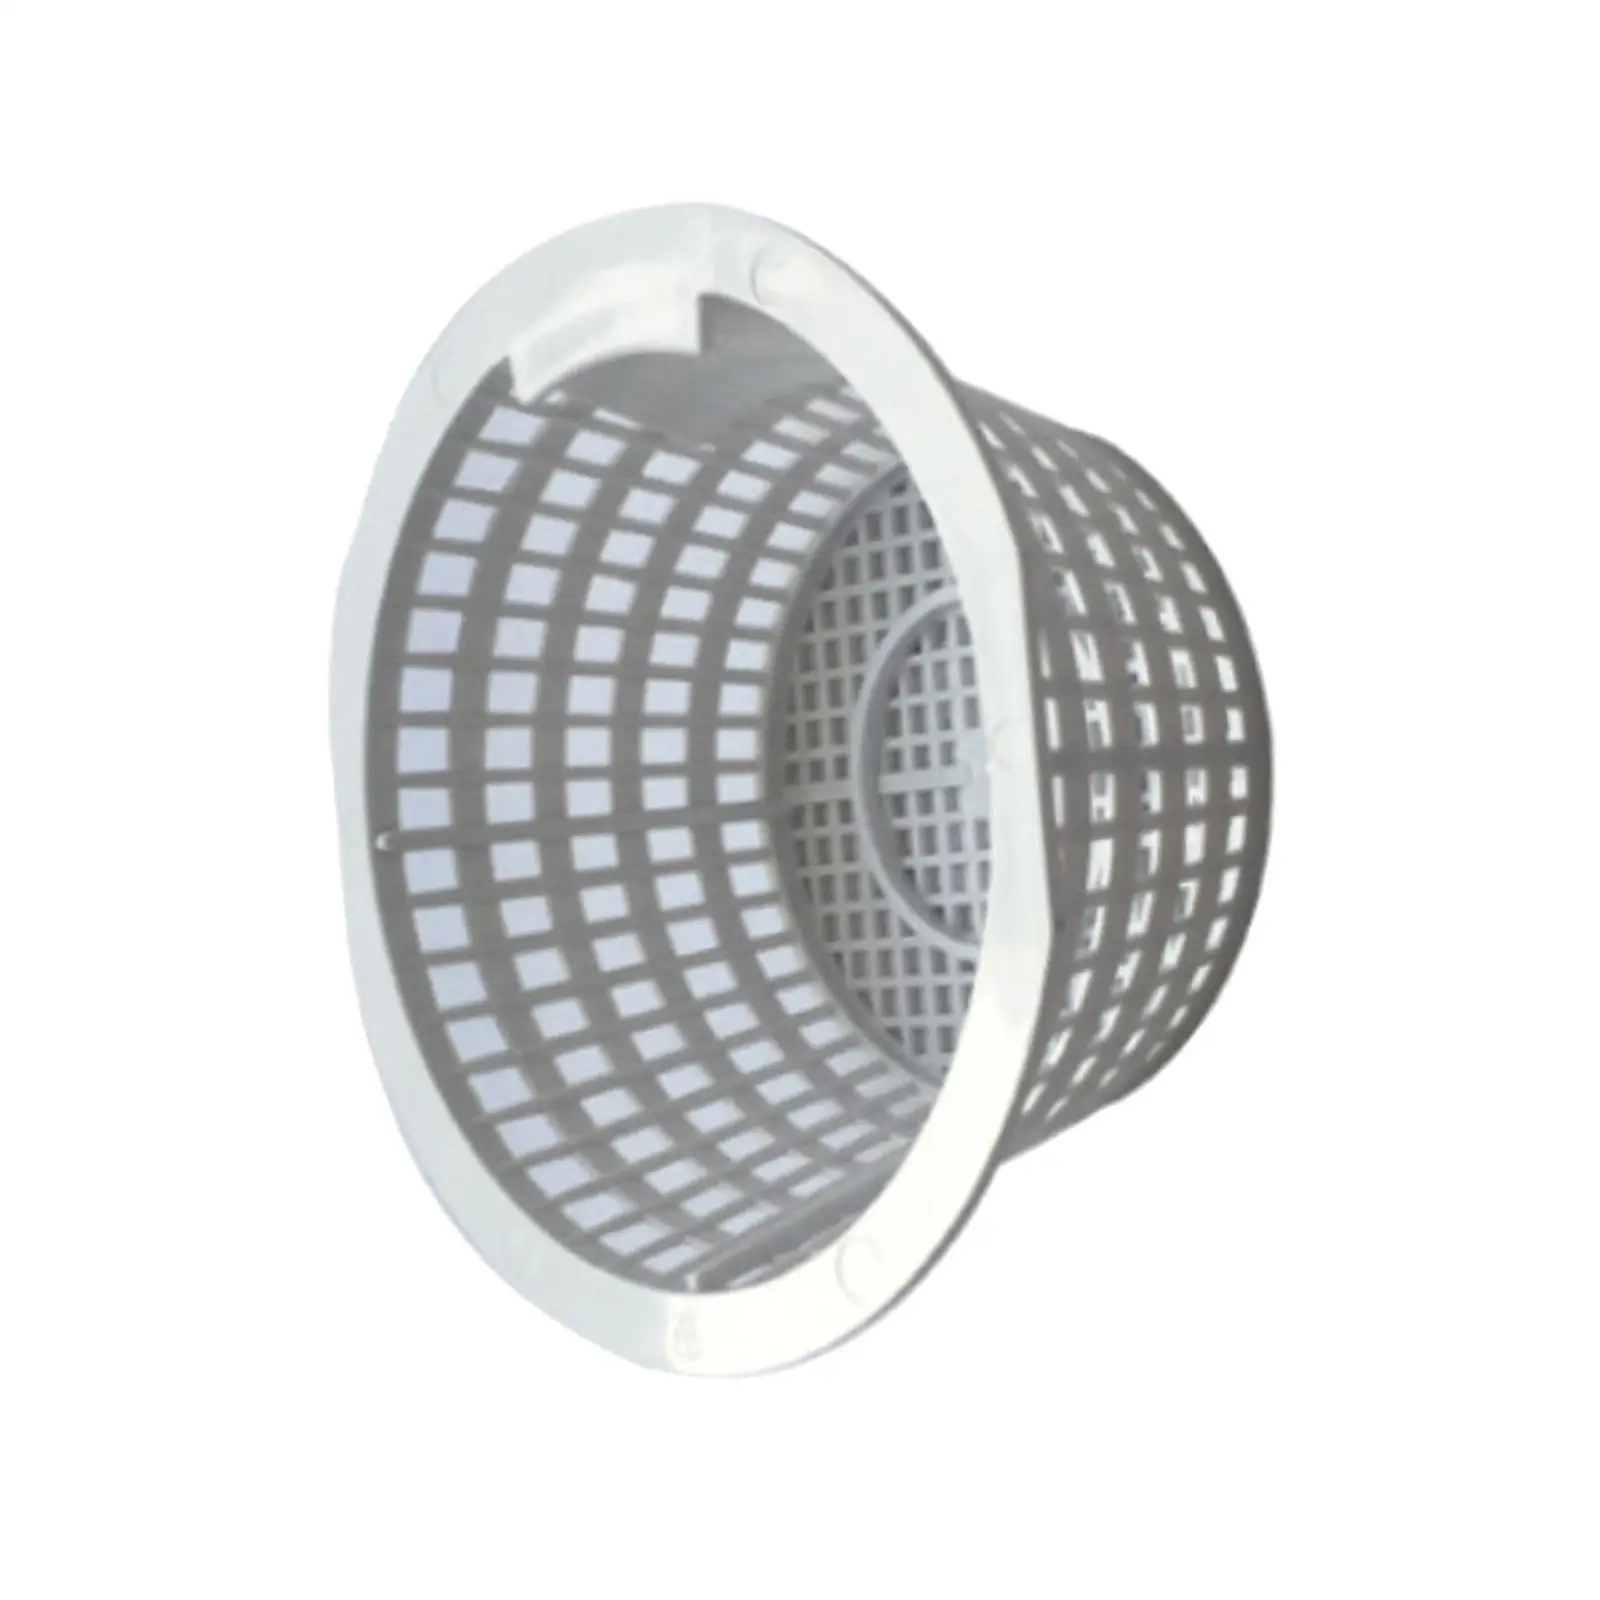 Pool Strainer Basket Reusable 5.9``width 2.76`` Deep Effective Fittings Skimmer Basket for Cleaning Leaves Swimming Pool Debris